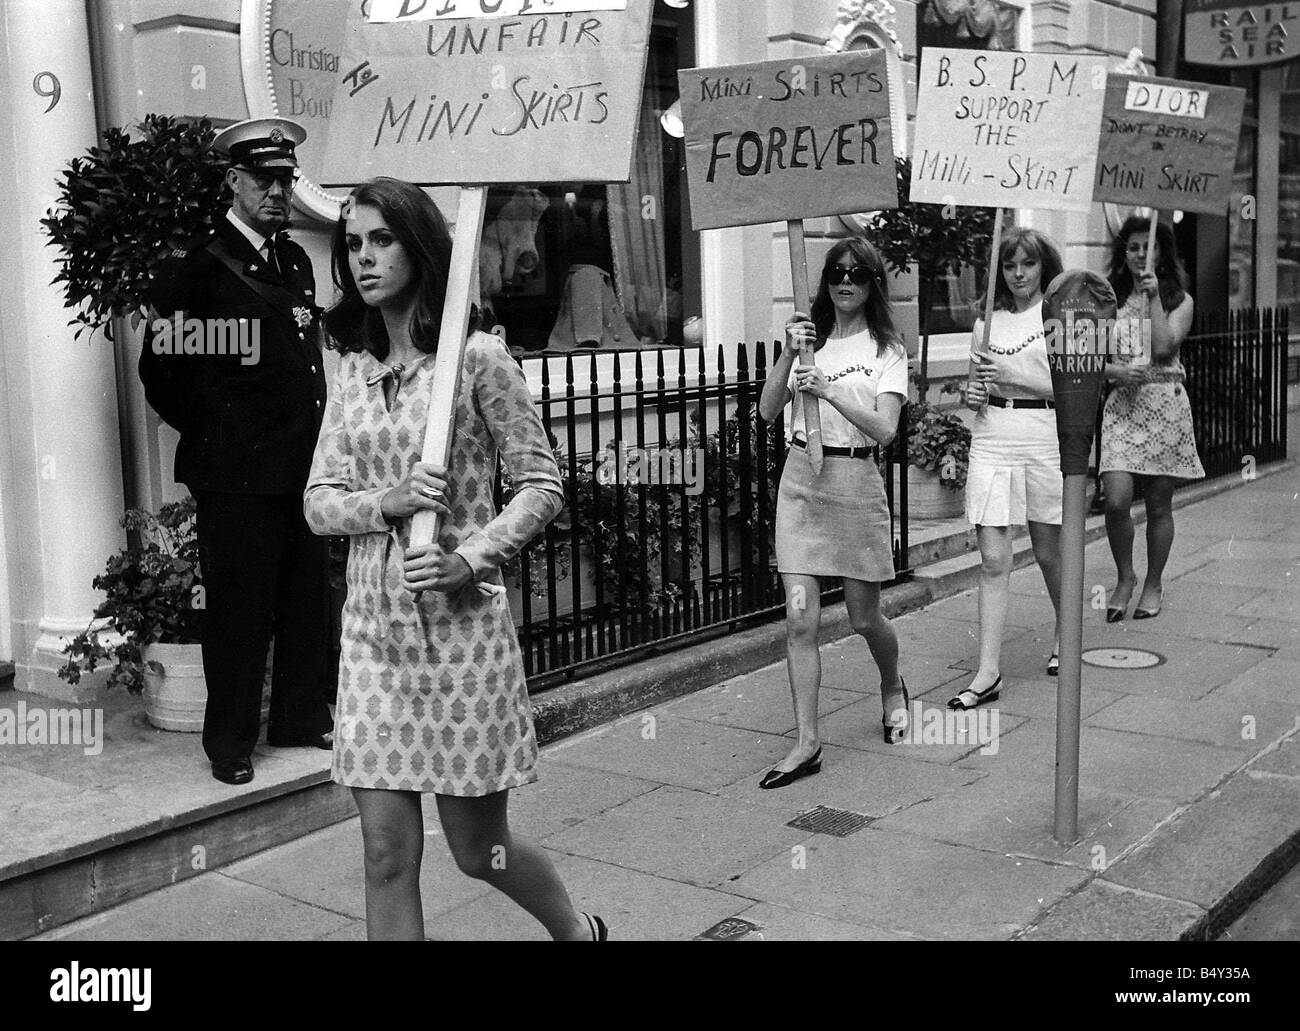 Mini Skirts 1960s High Resolution Stock ...